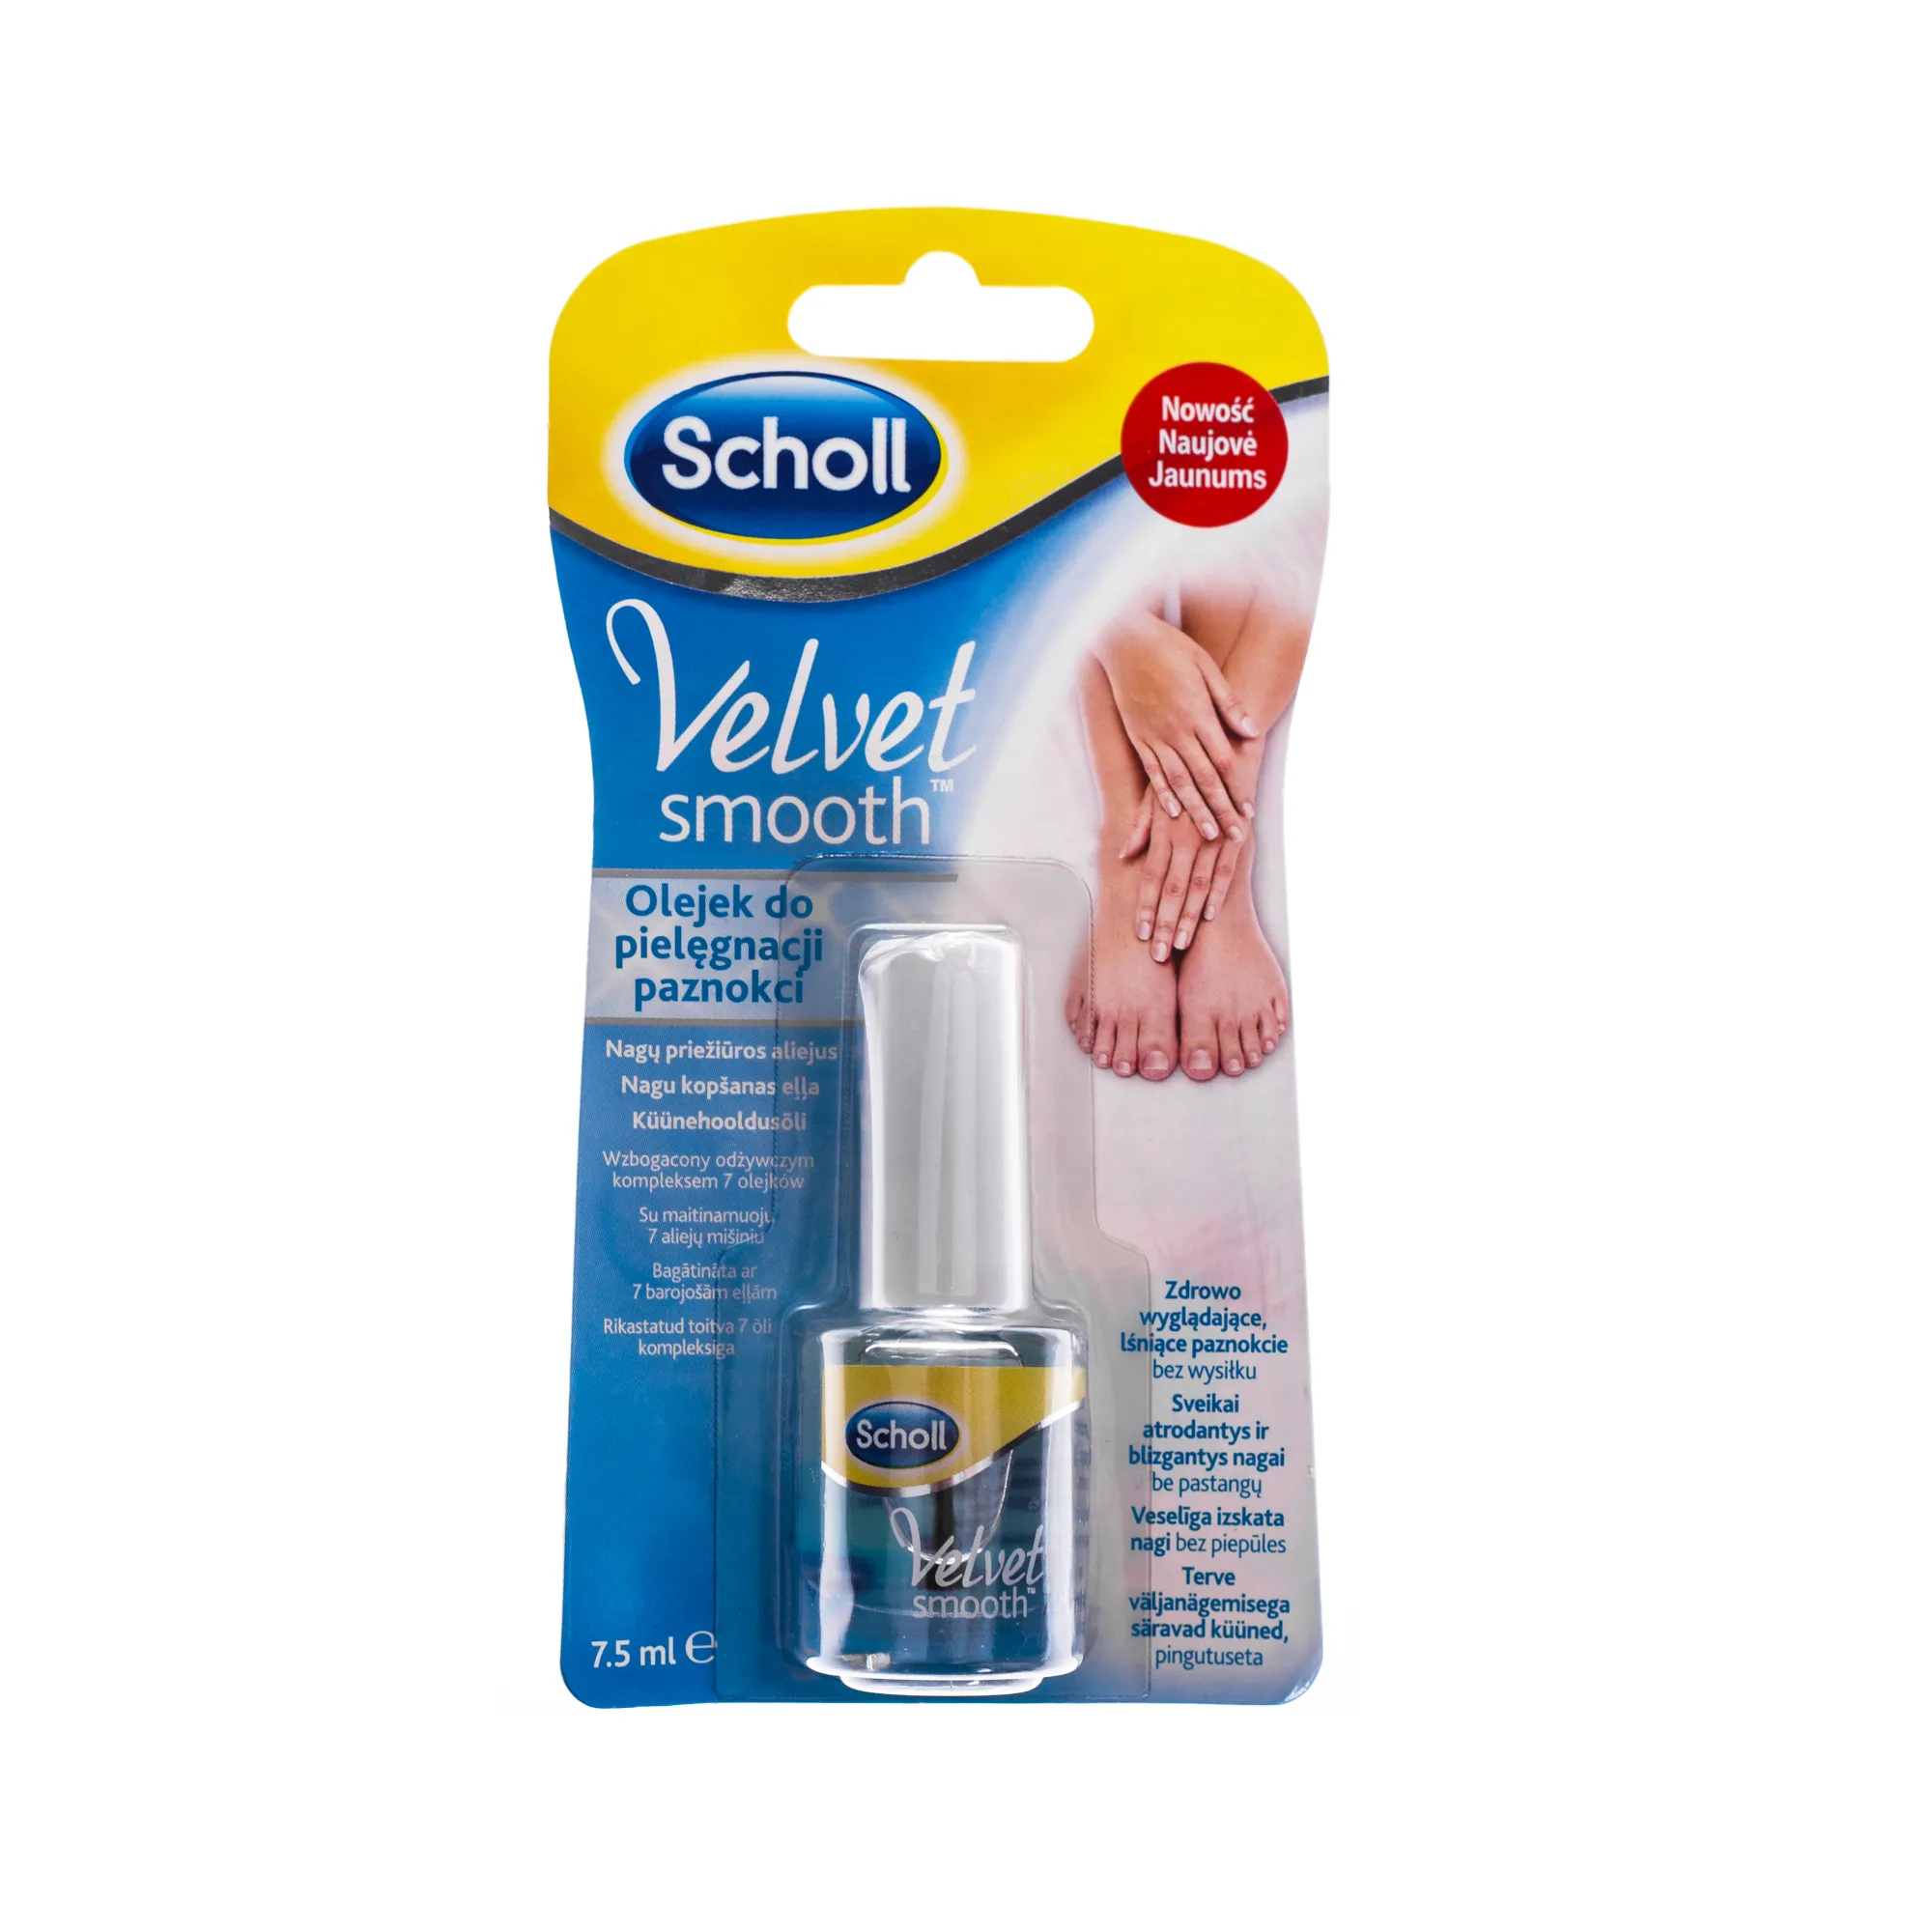 Scholl Velvet Smooth, olejek do pielęgnacji paznokci, 7,5 ml